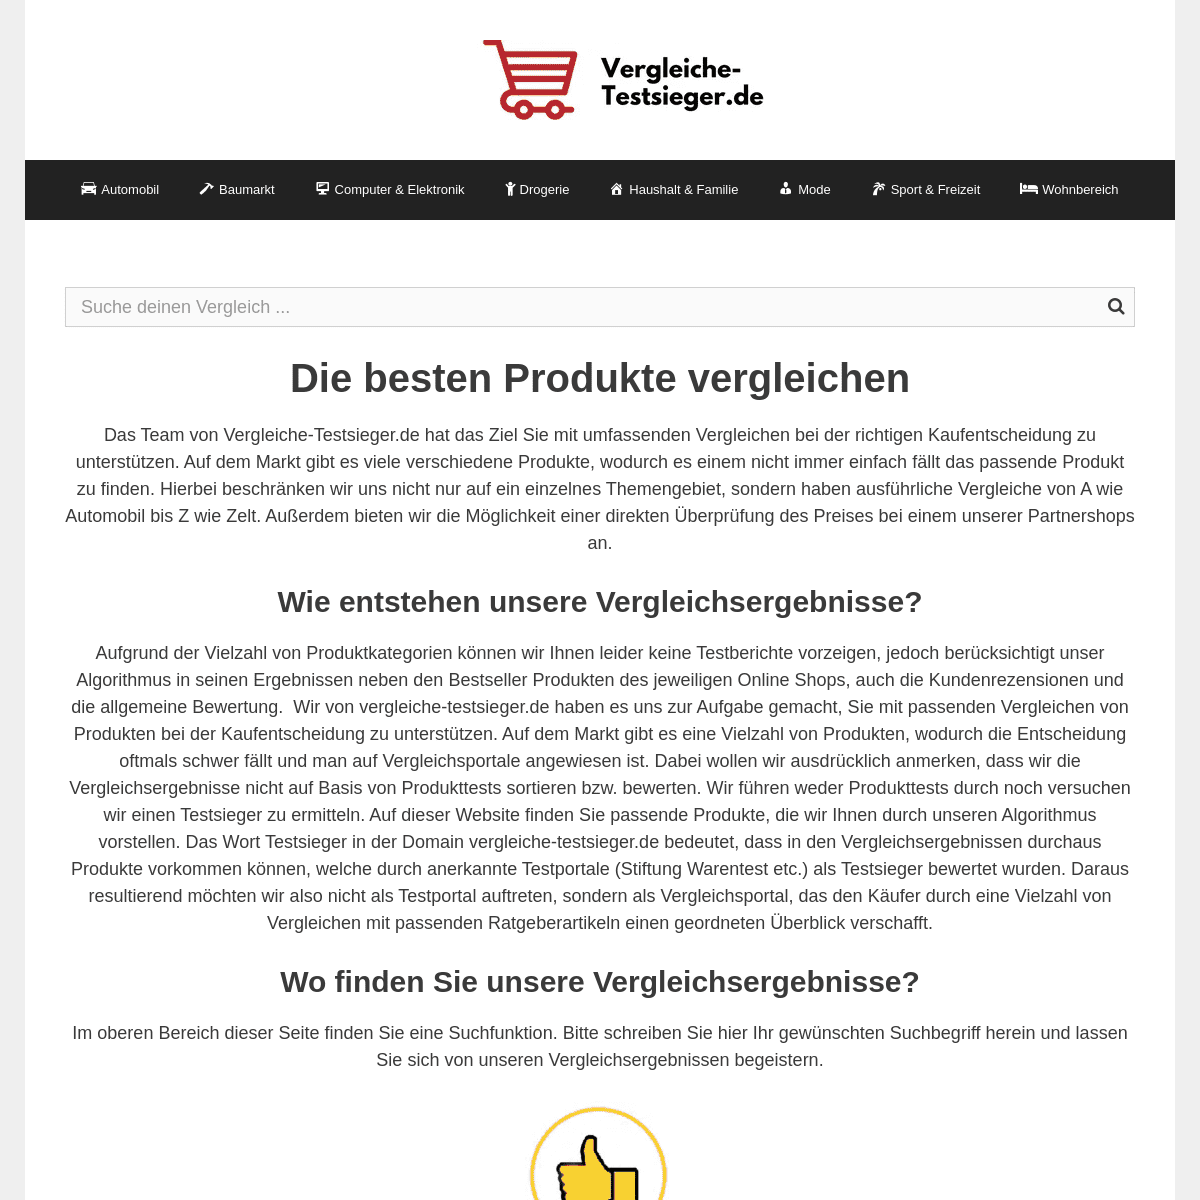 A complete backup of vergleiche-testsieger.de